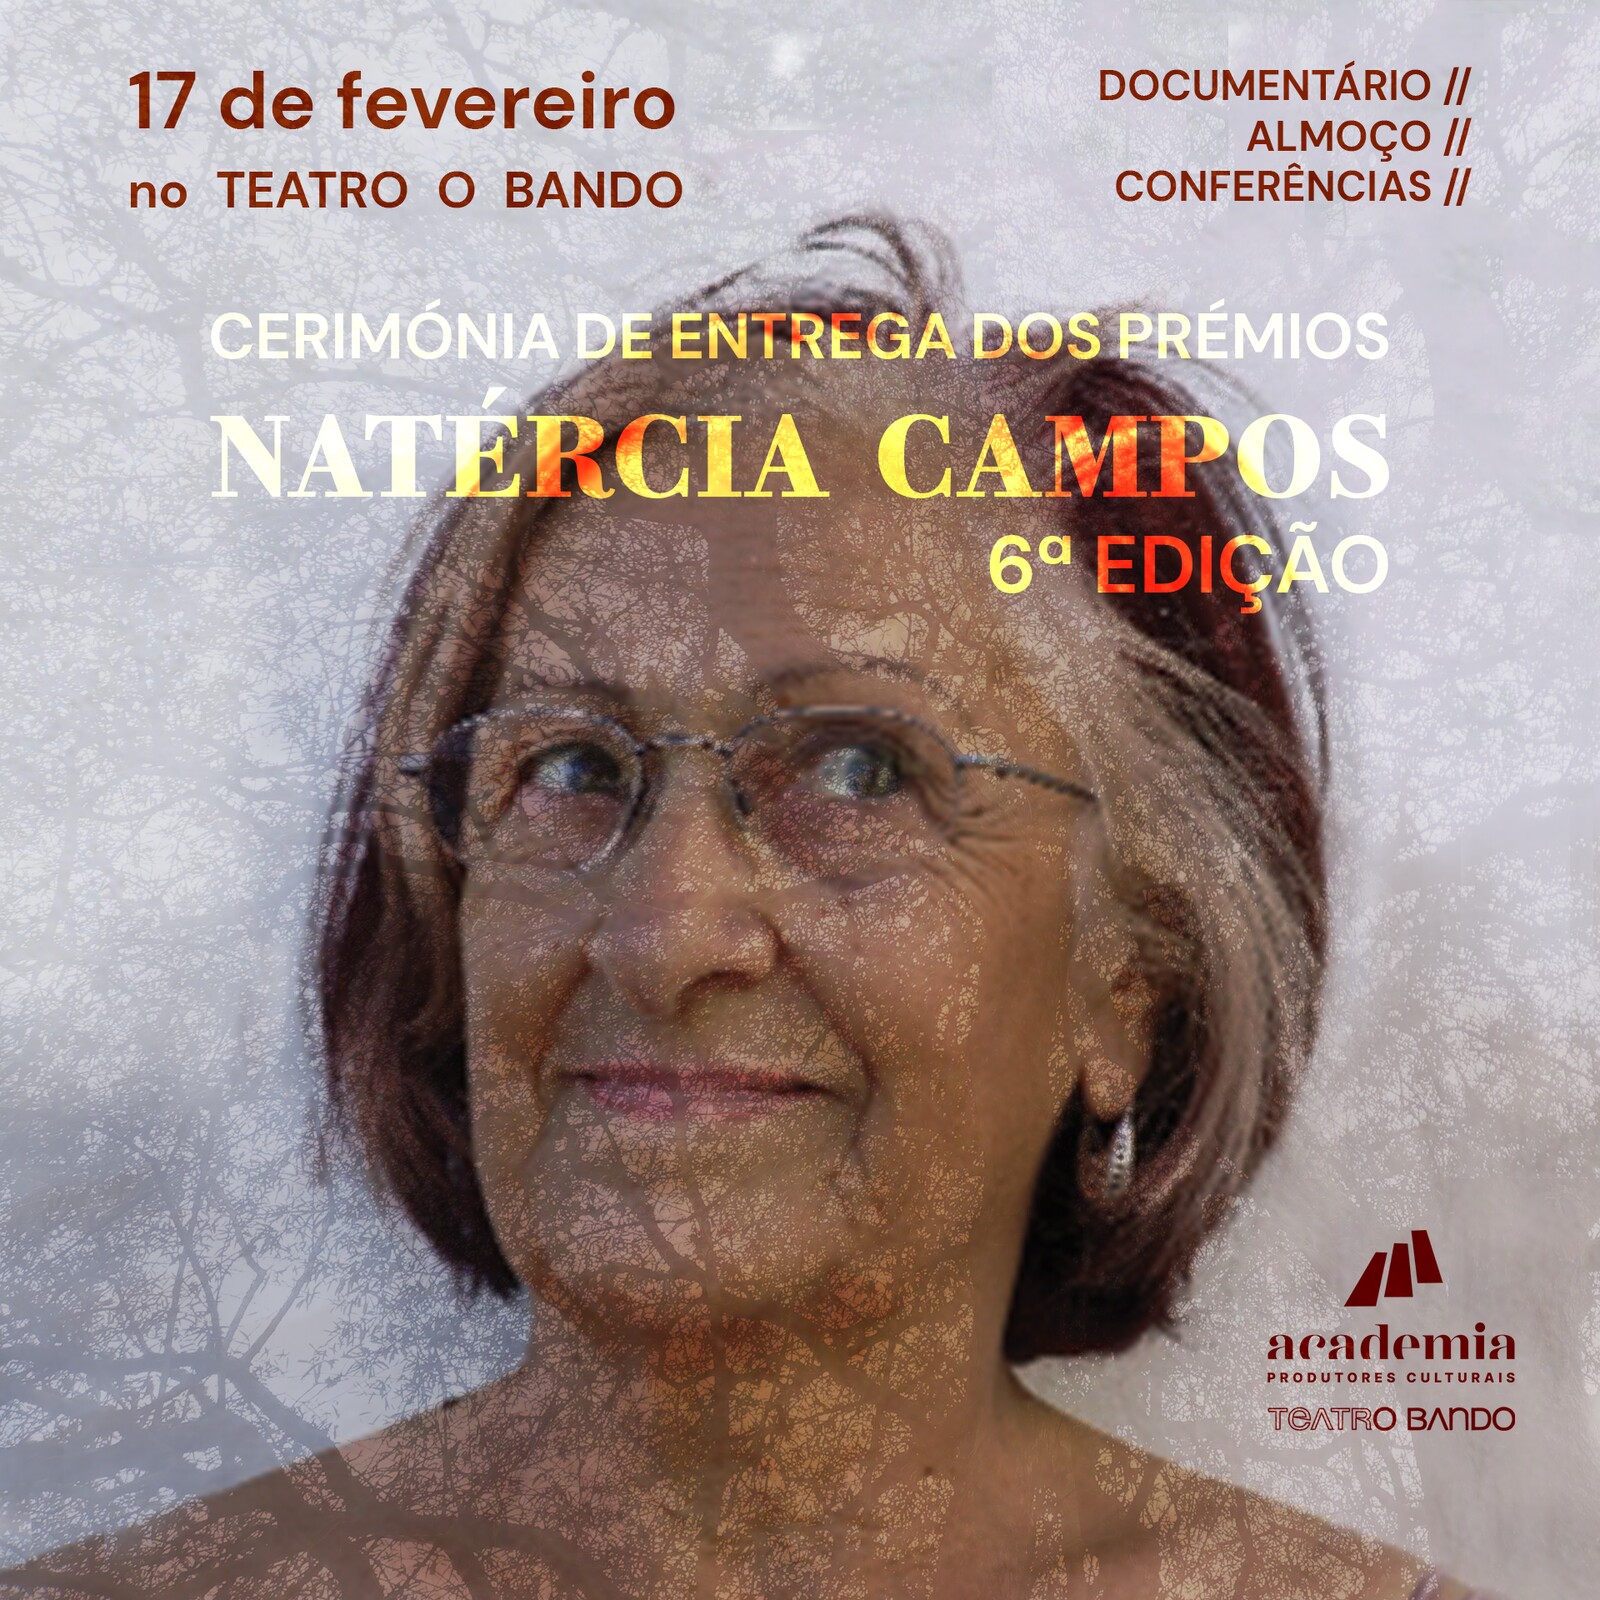 Teatro O Bando acolhe entrega dos Prémios Natércia Campos 2023